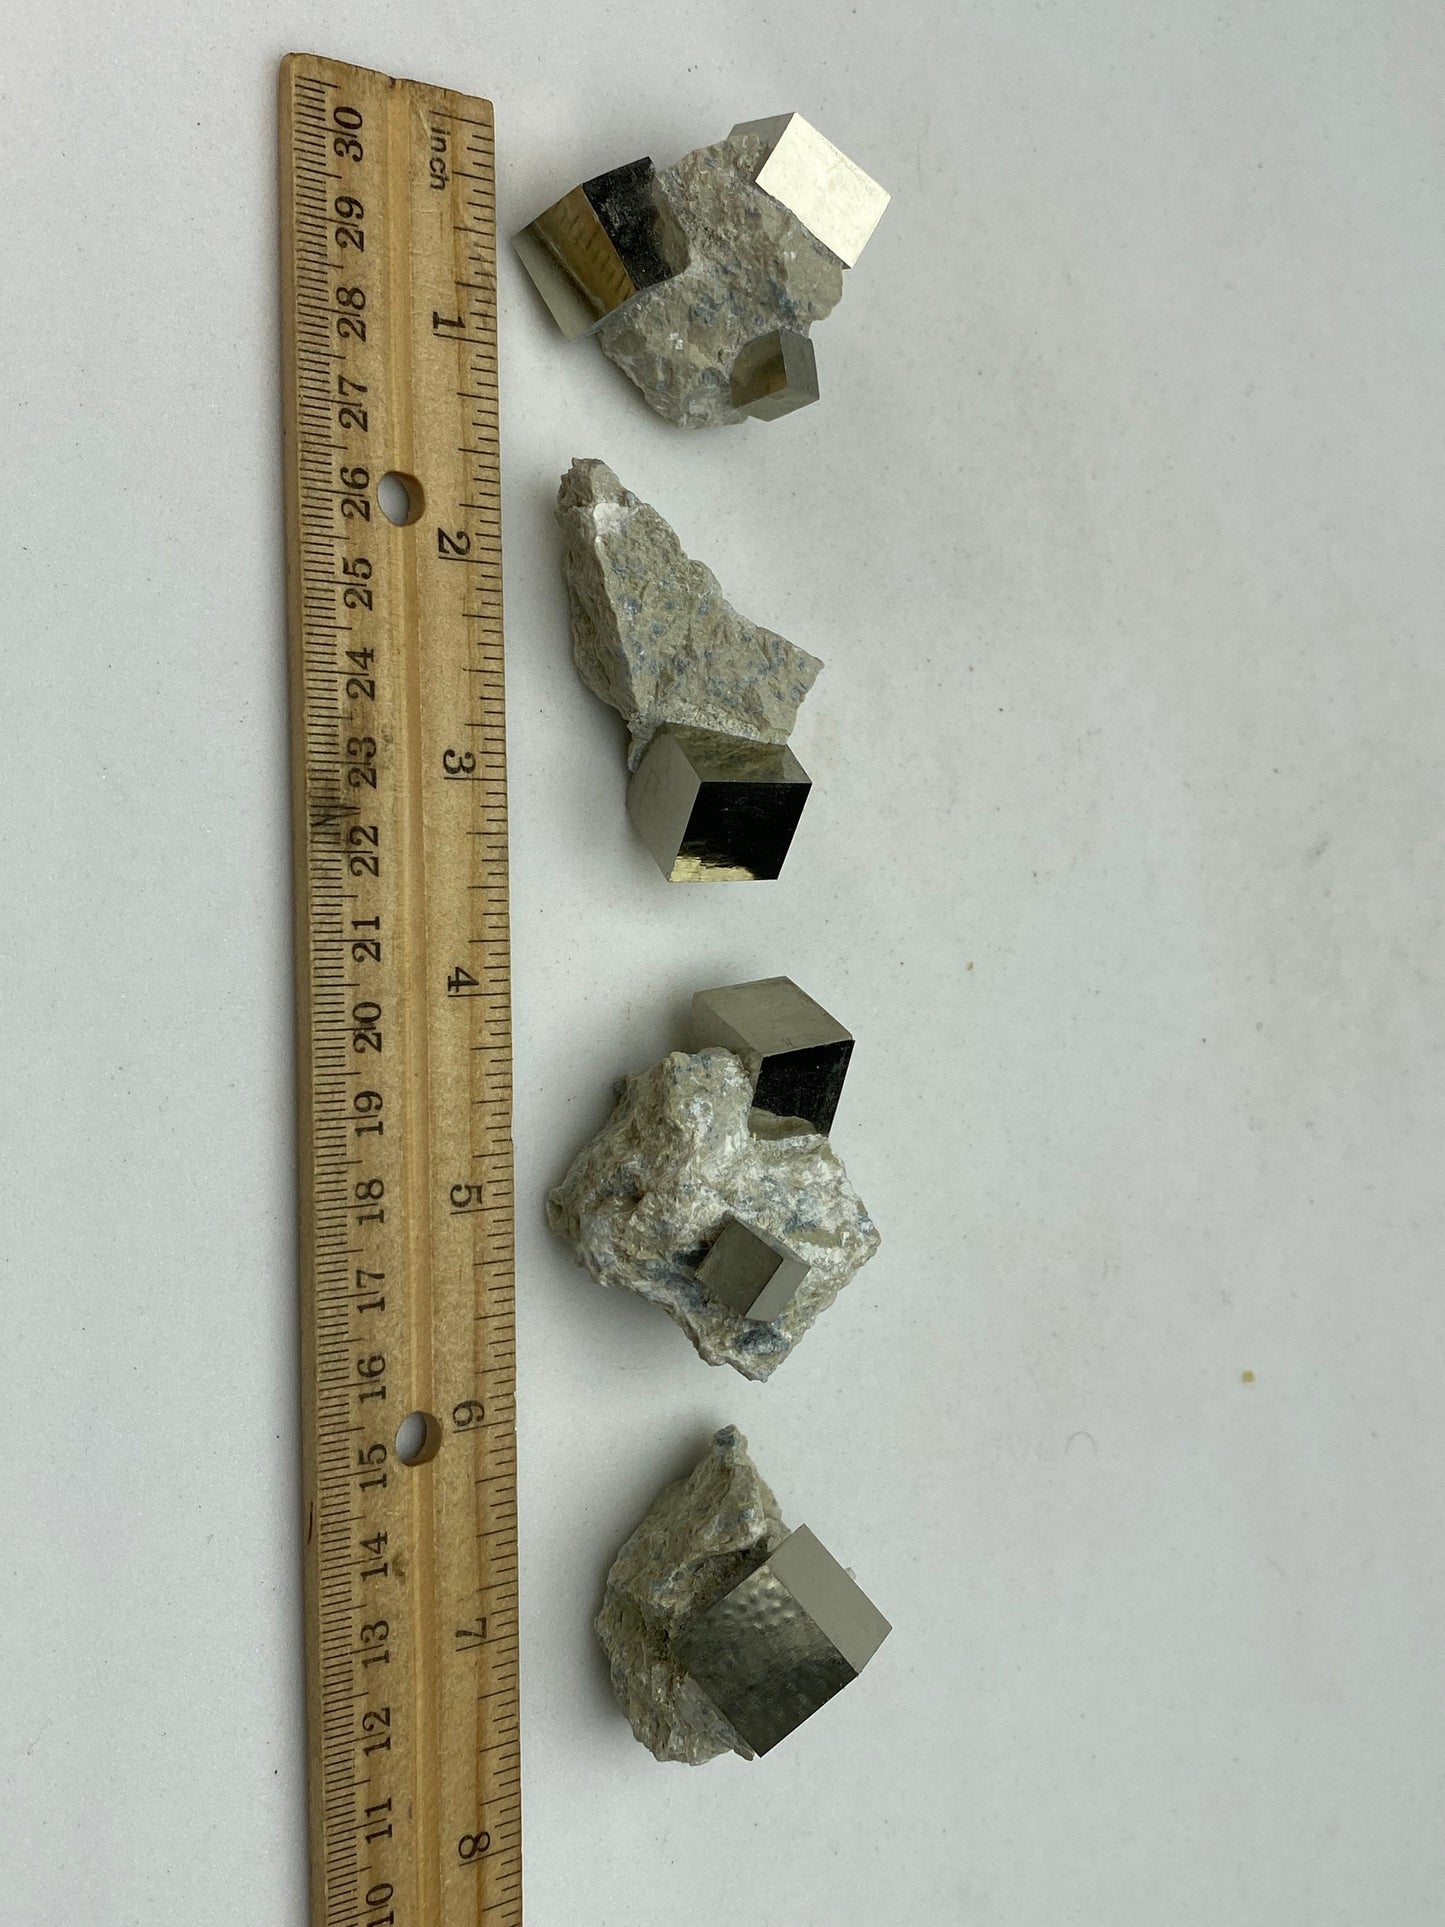 Small Pyrite cube crystals in Matrix from Navajun Spain